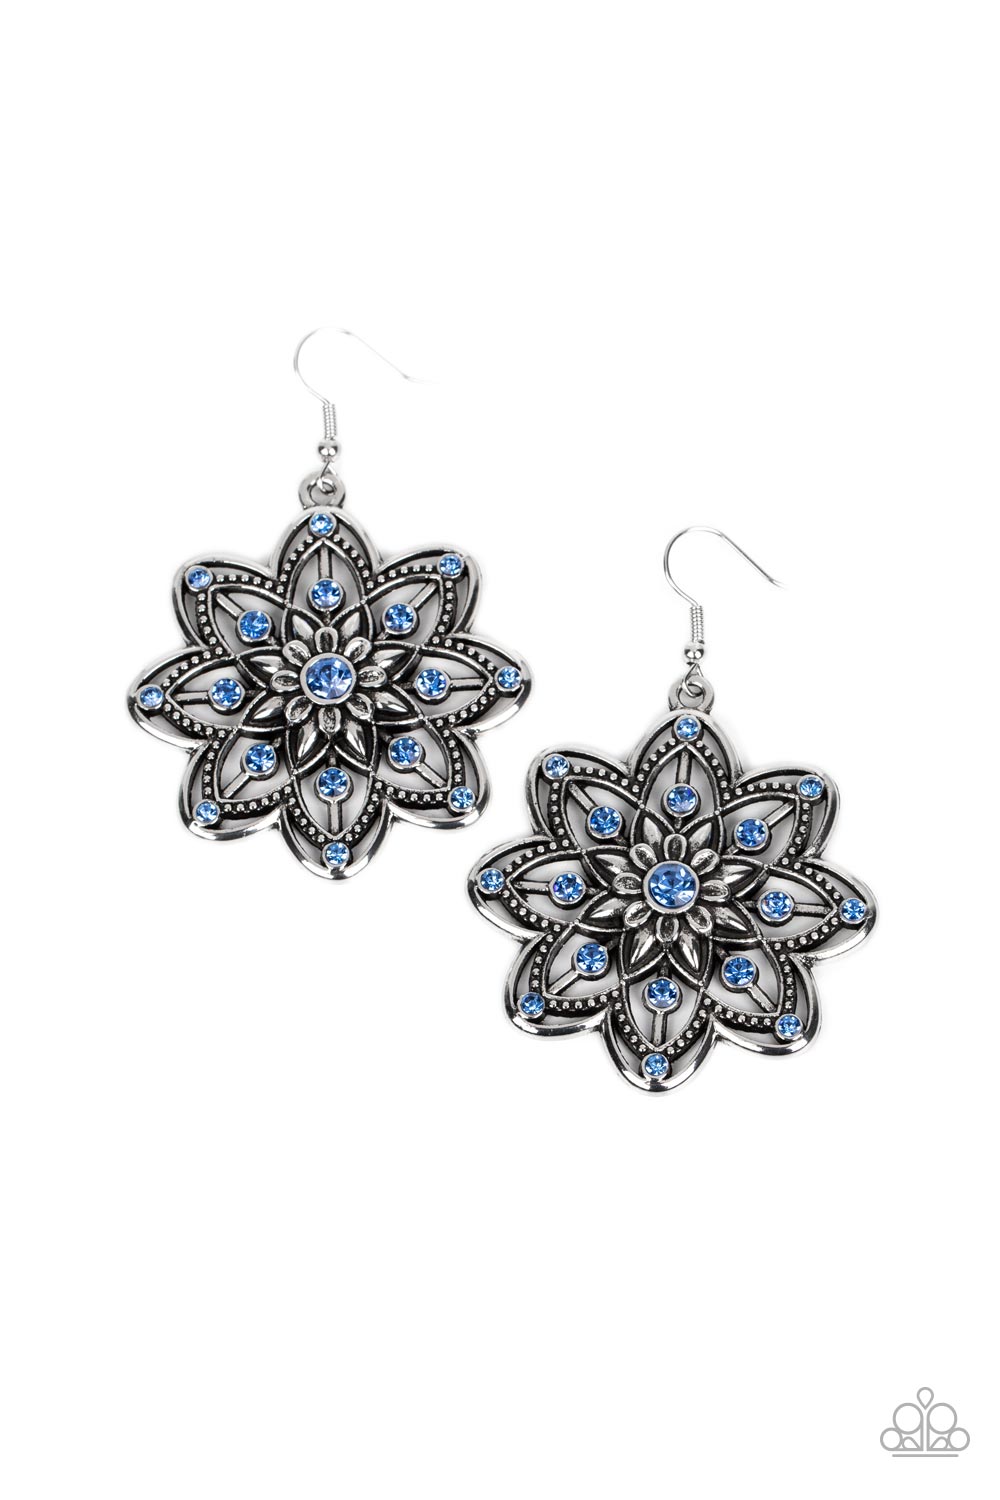 Prismatic Perennial Blue Rhinestone Earrings - Paparazzi Accessories- lightbox - CarasShop.com - $5 Jewelry by Cara Jewels